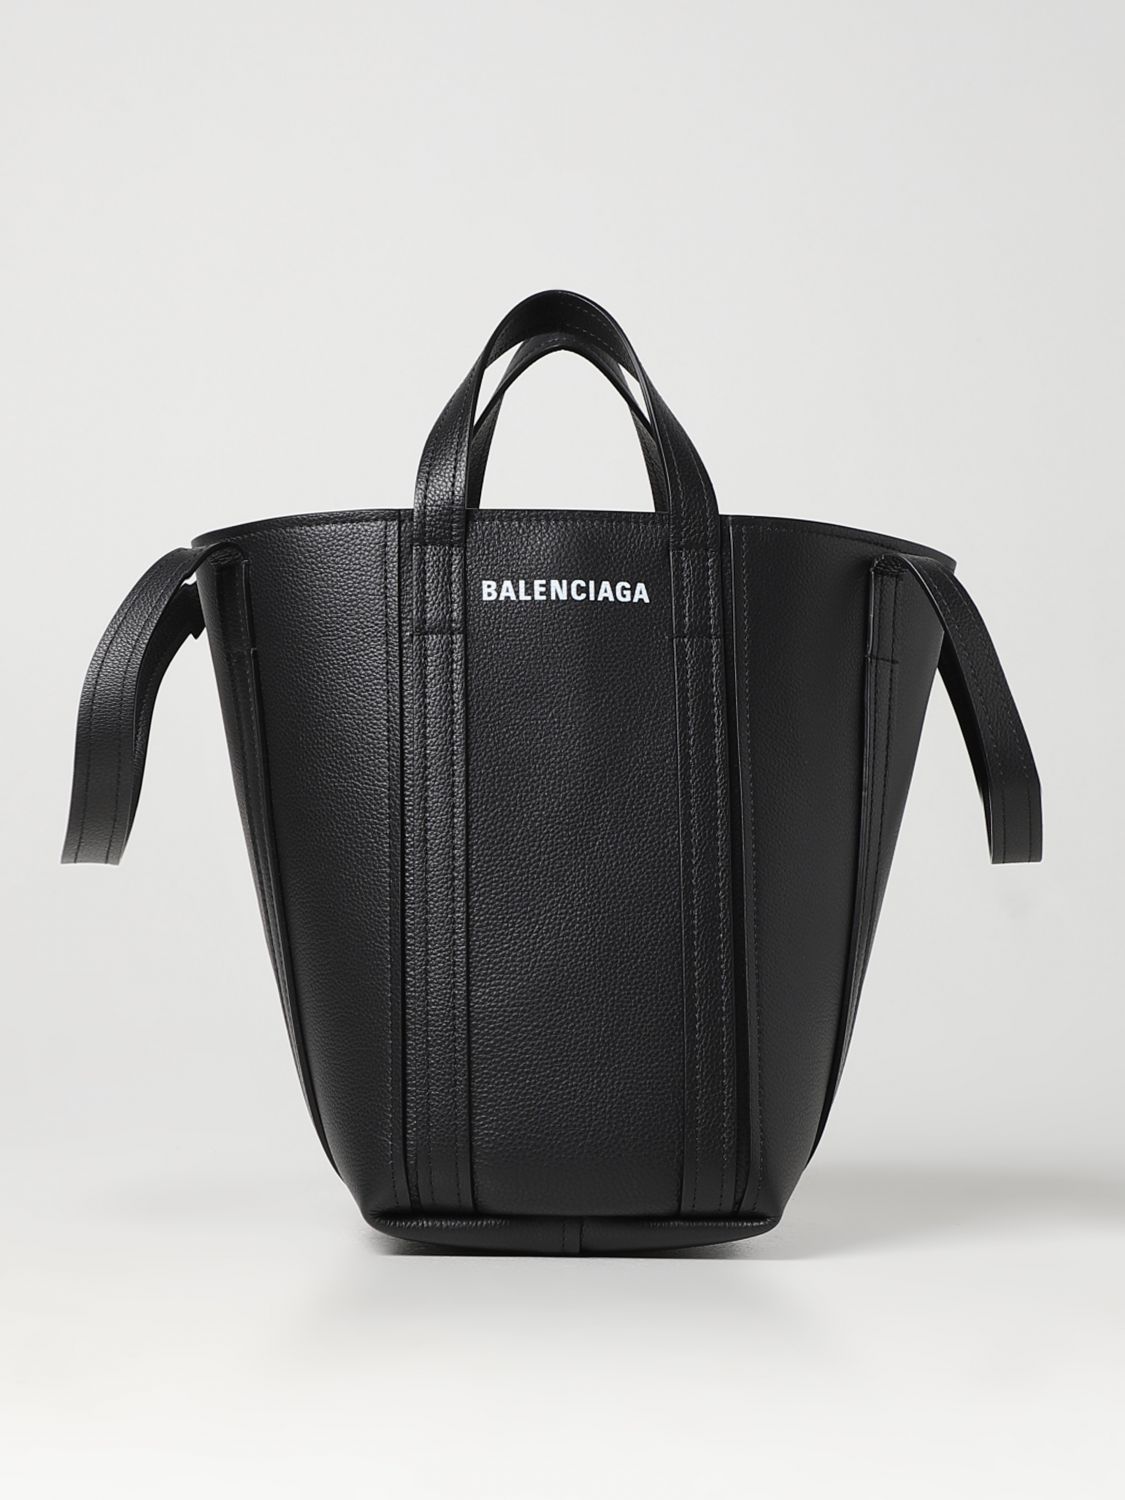 blur skepsis Understrege BALENCIAGA: Everyday 2.0 North-South bag in grained leather - Black |  Balenciaga shoulder bag 67279115YUN online on GIGLIO.COM